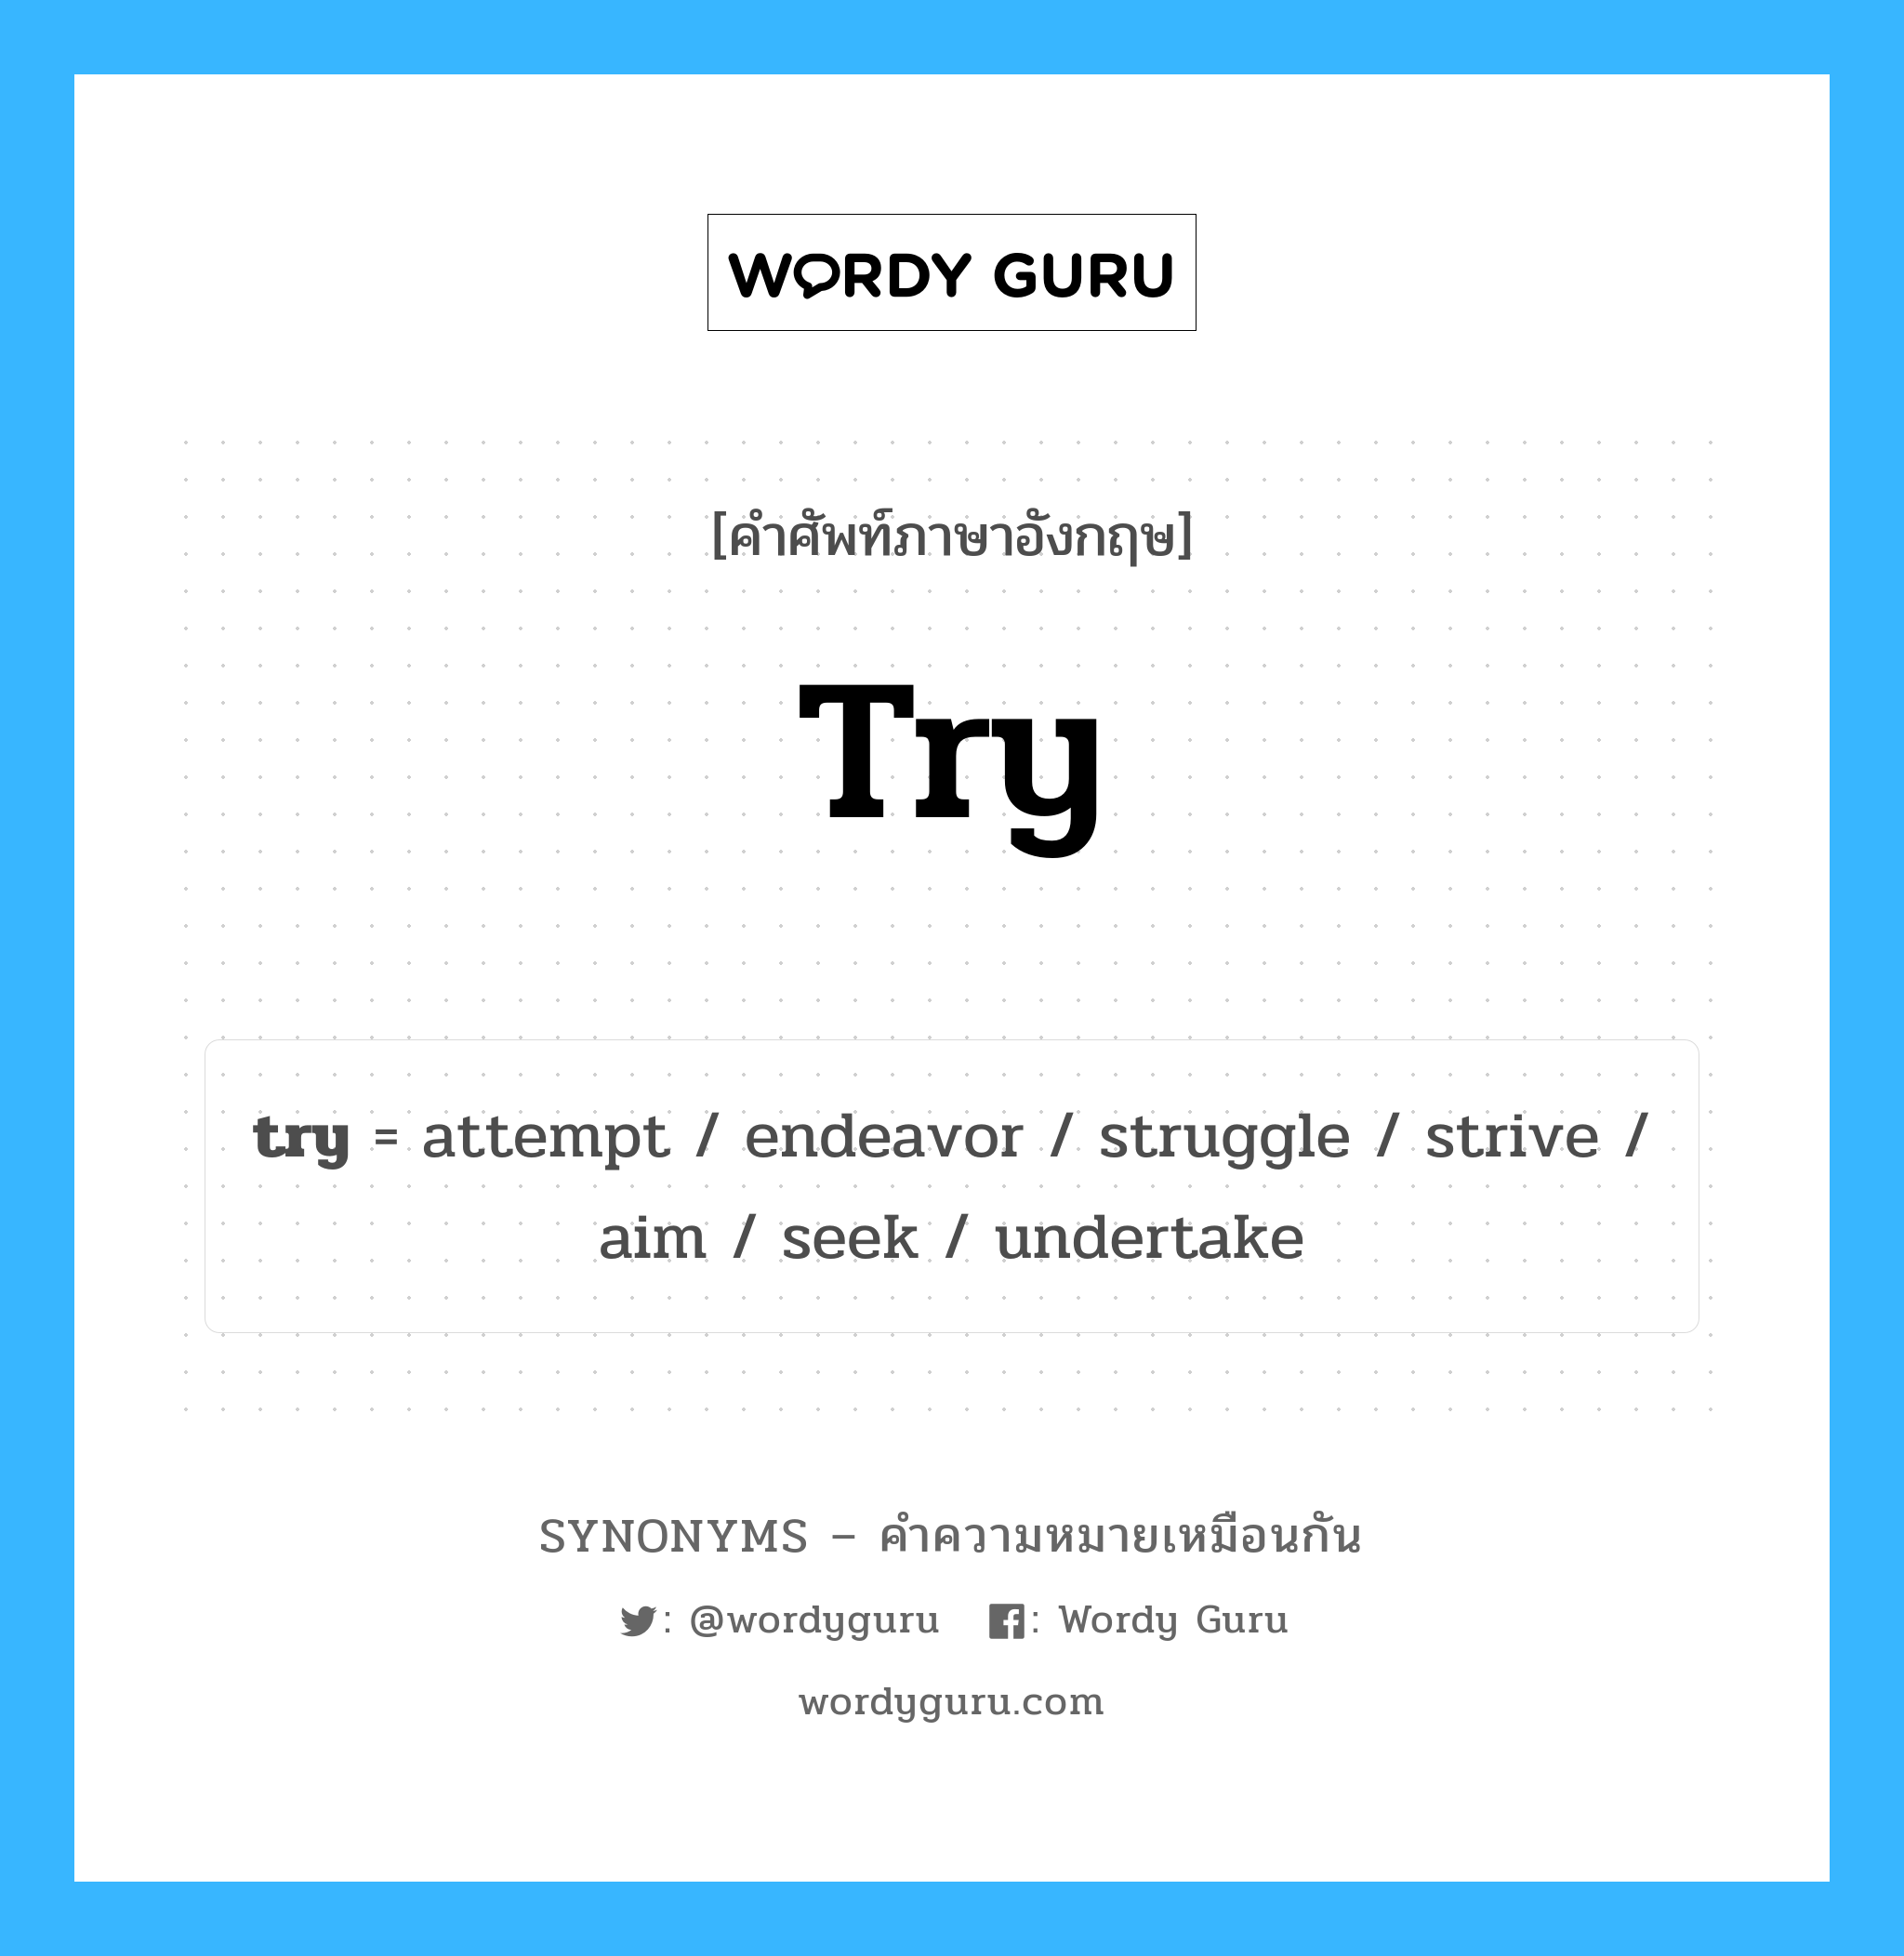 strive เป็นหนึ่งใน try และมีคำอื่น ๆ อีกดังนี้, คำศัพท์ภาษาอังกฤษ strive ความหมายคล้ายกันกับ try แปลว่า มุ่งมั่น หมวด try